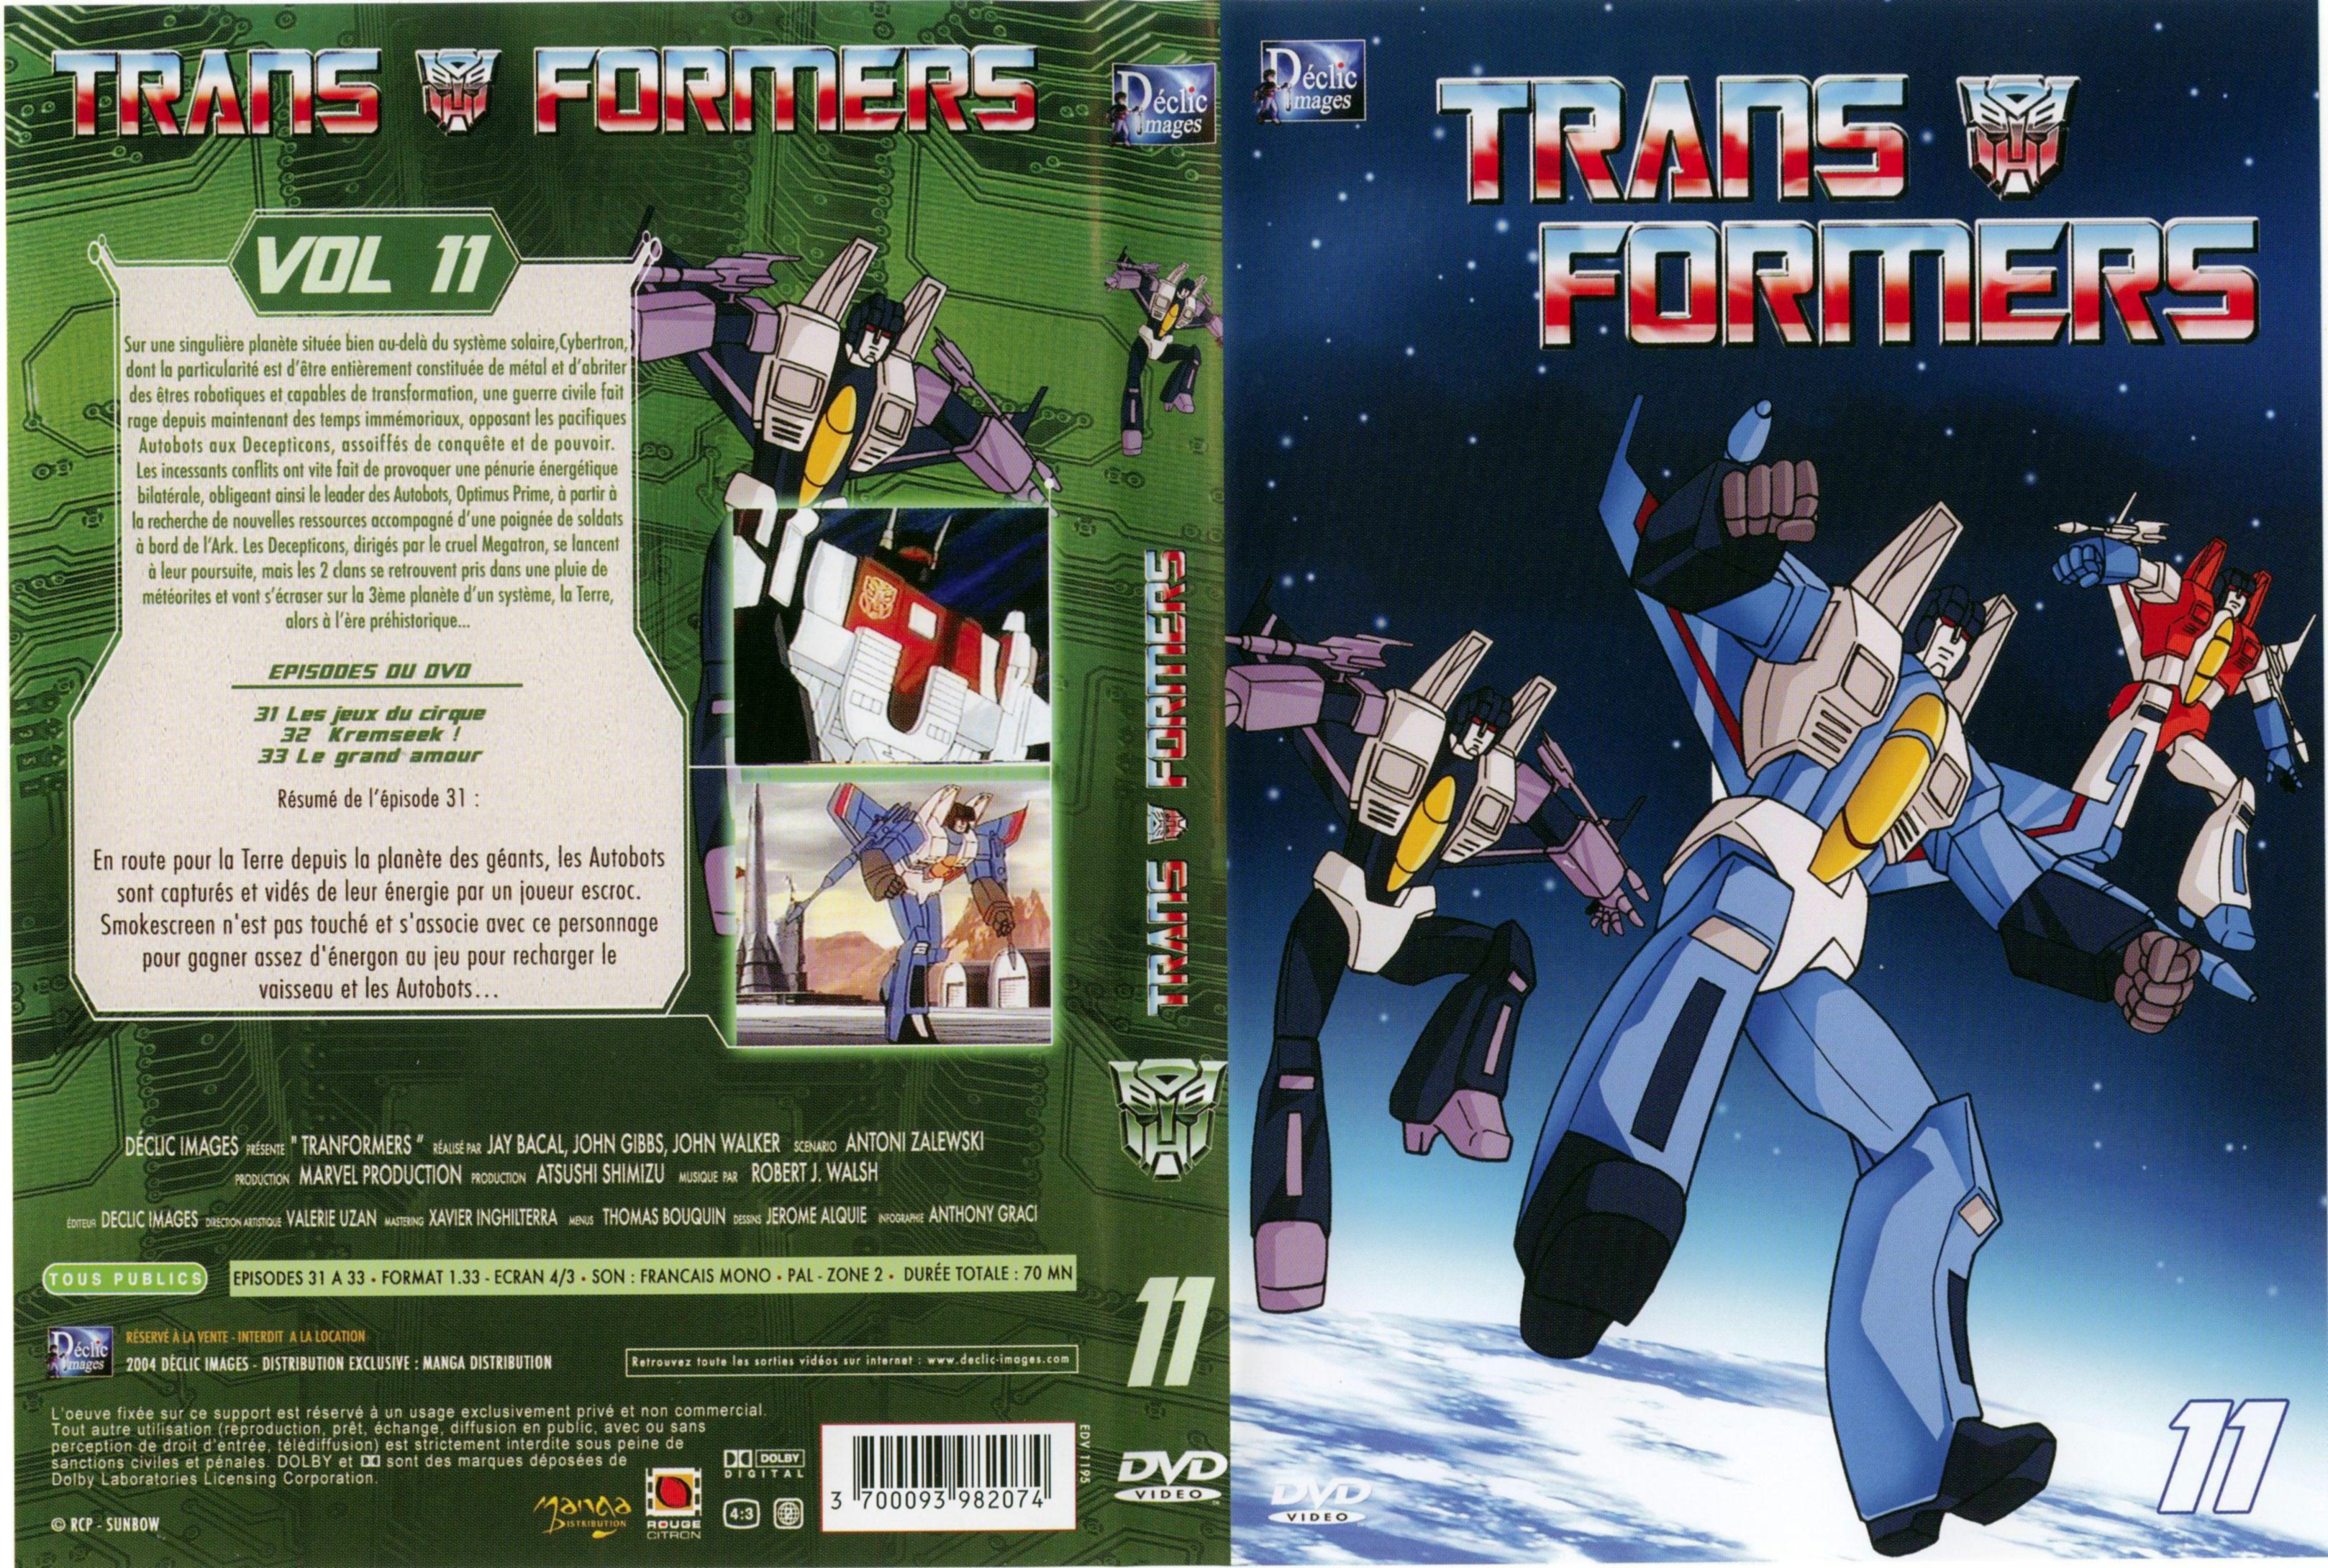 Jaquette DVD Transformers vol 11